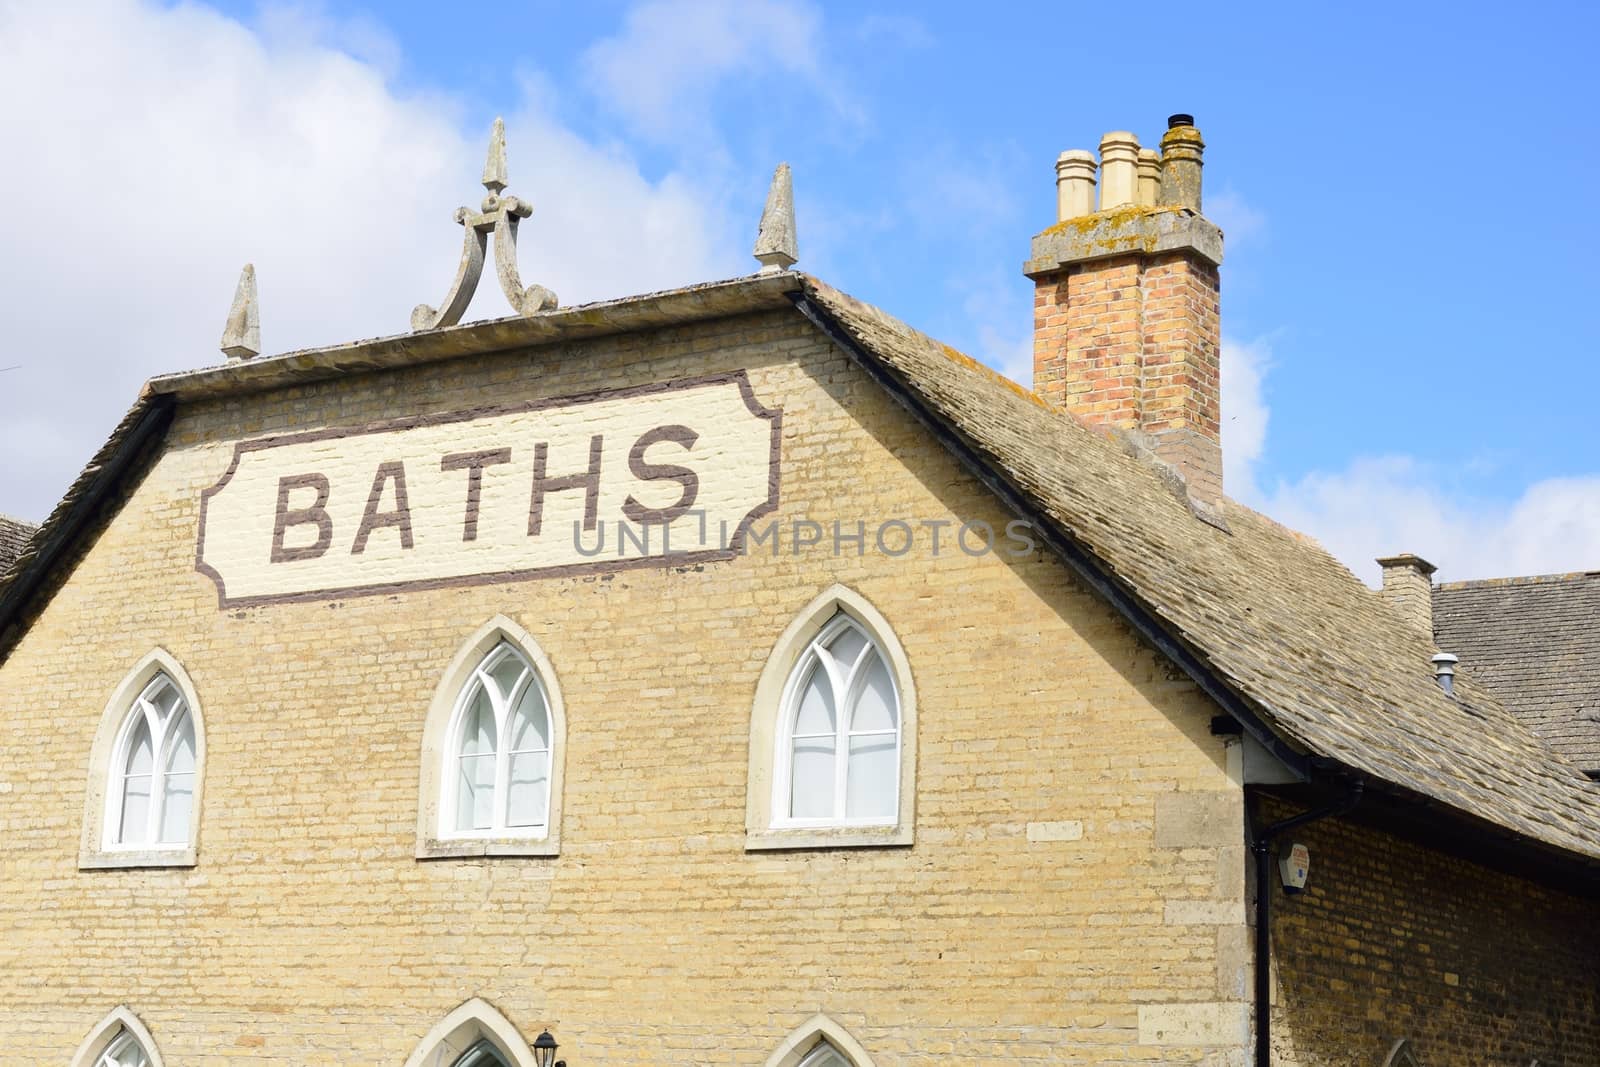 Public bath building england